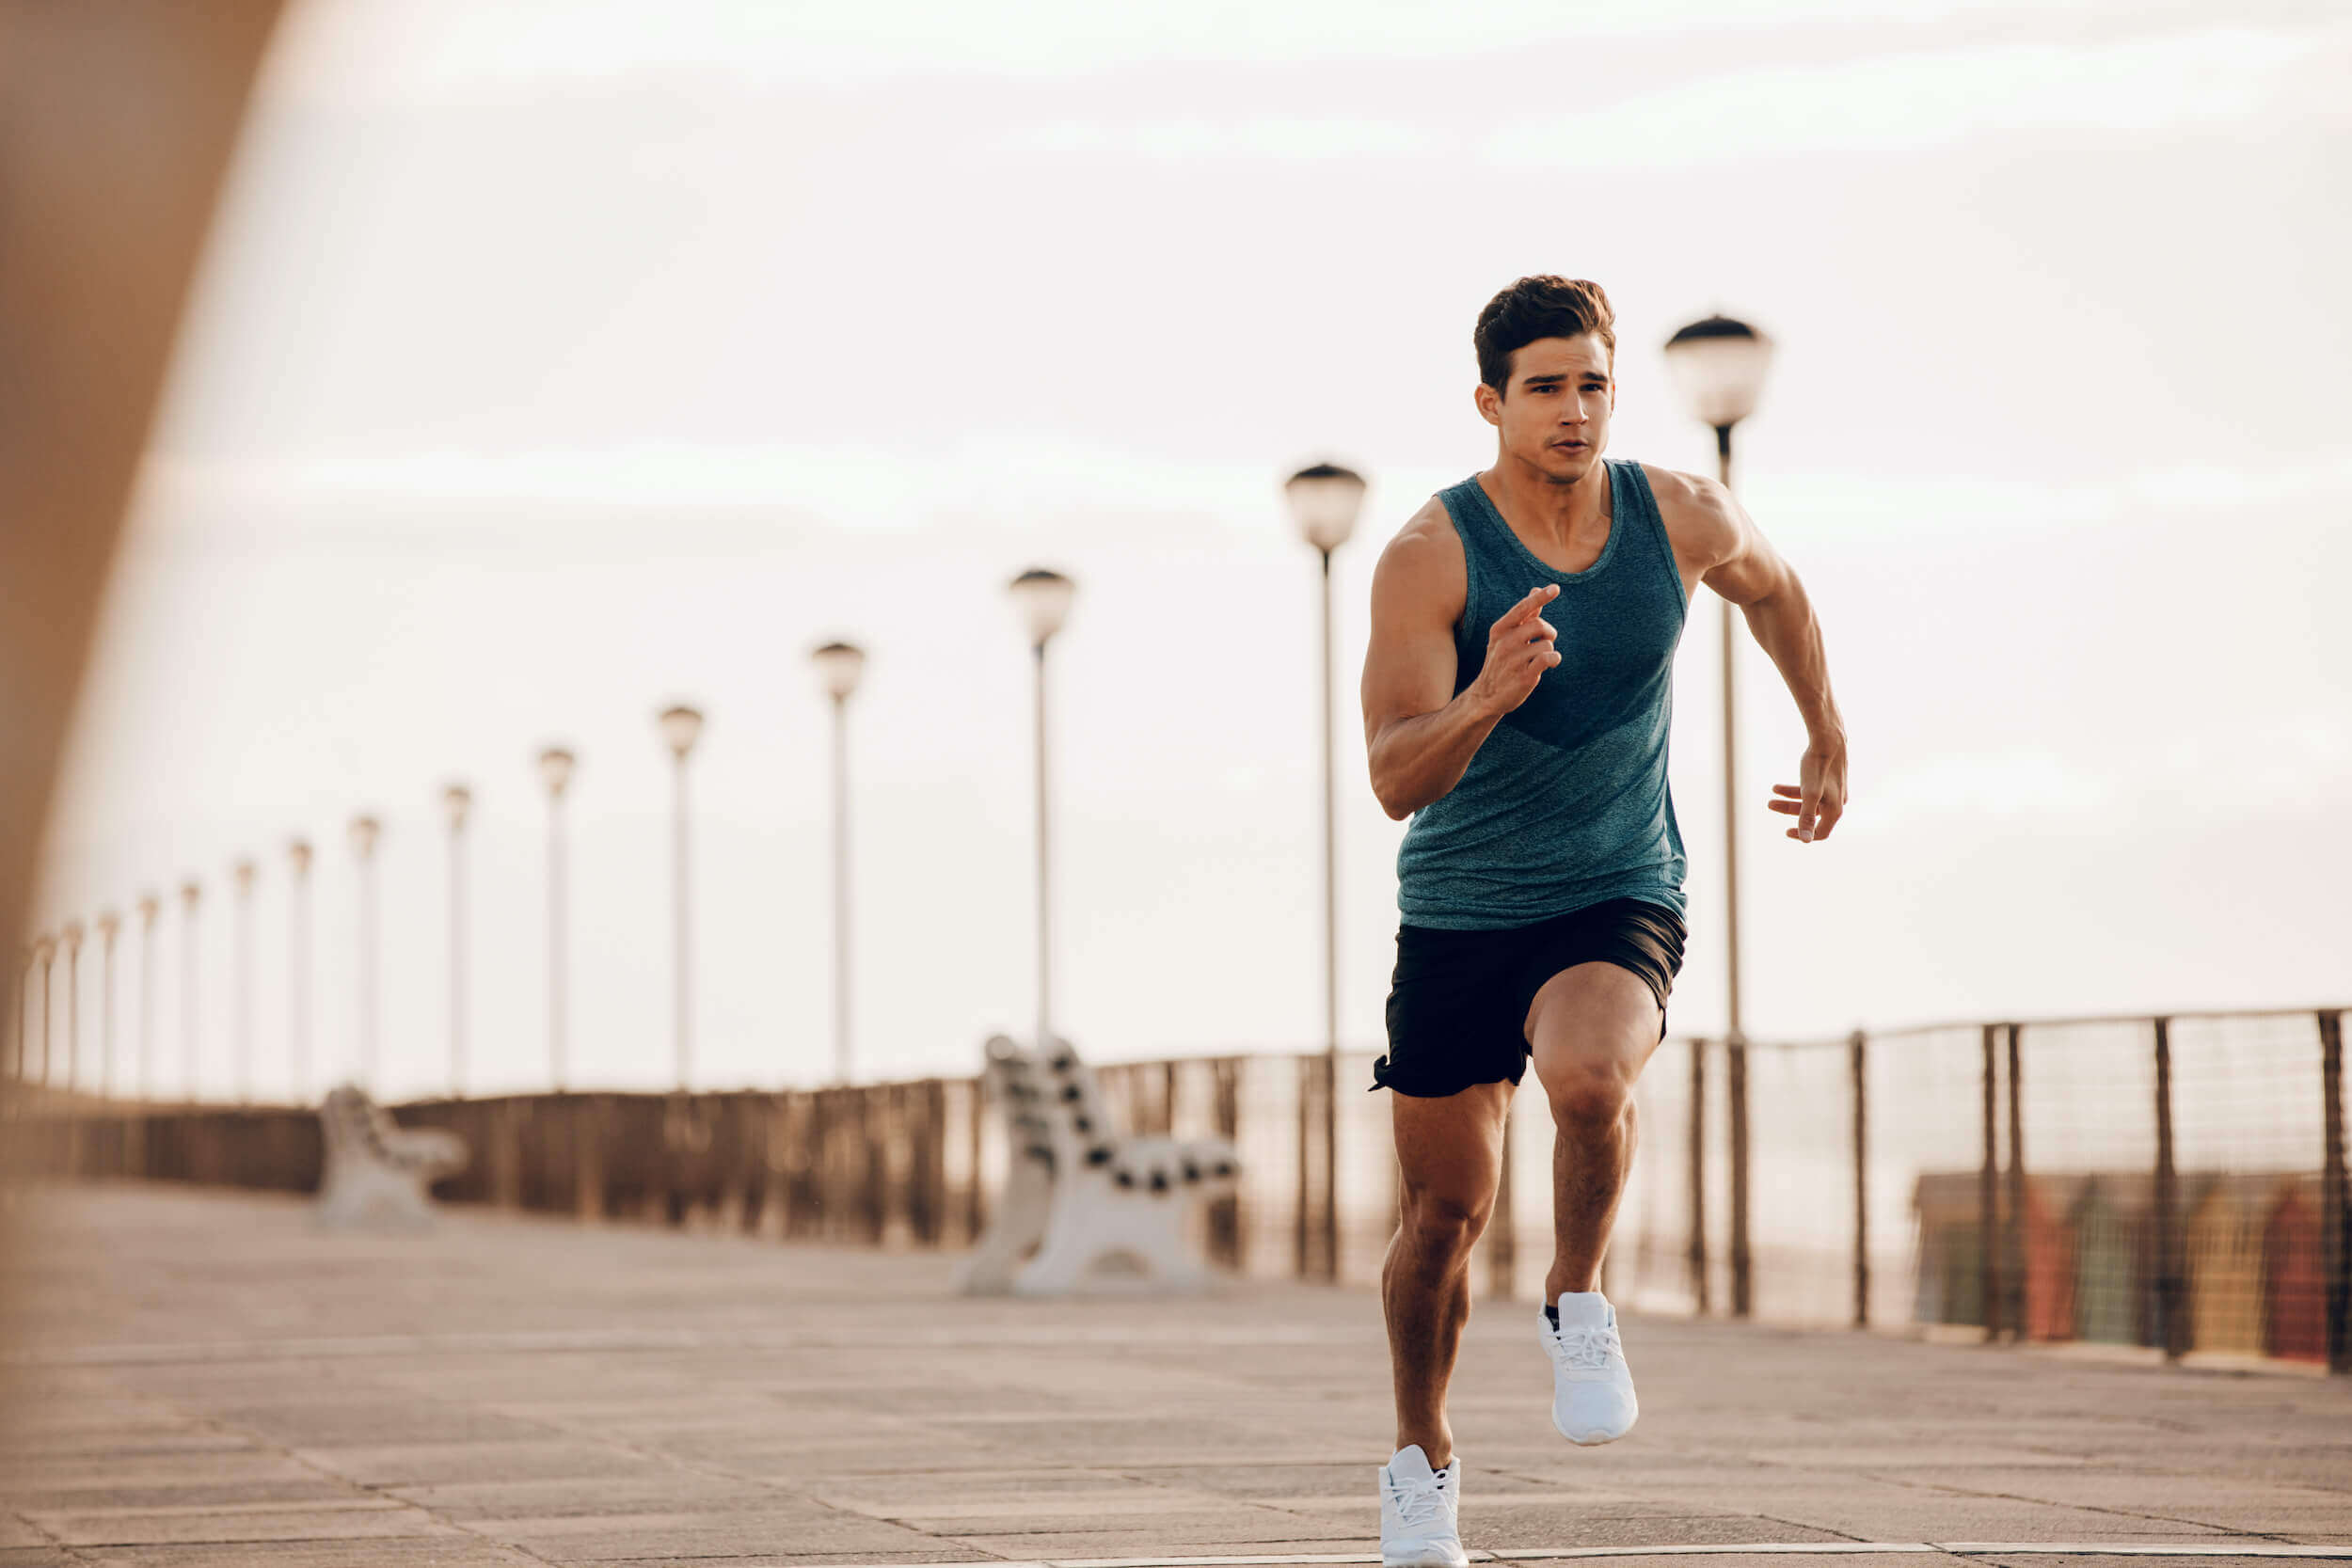 Comment le running transforme t-il le corps ?